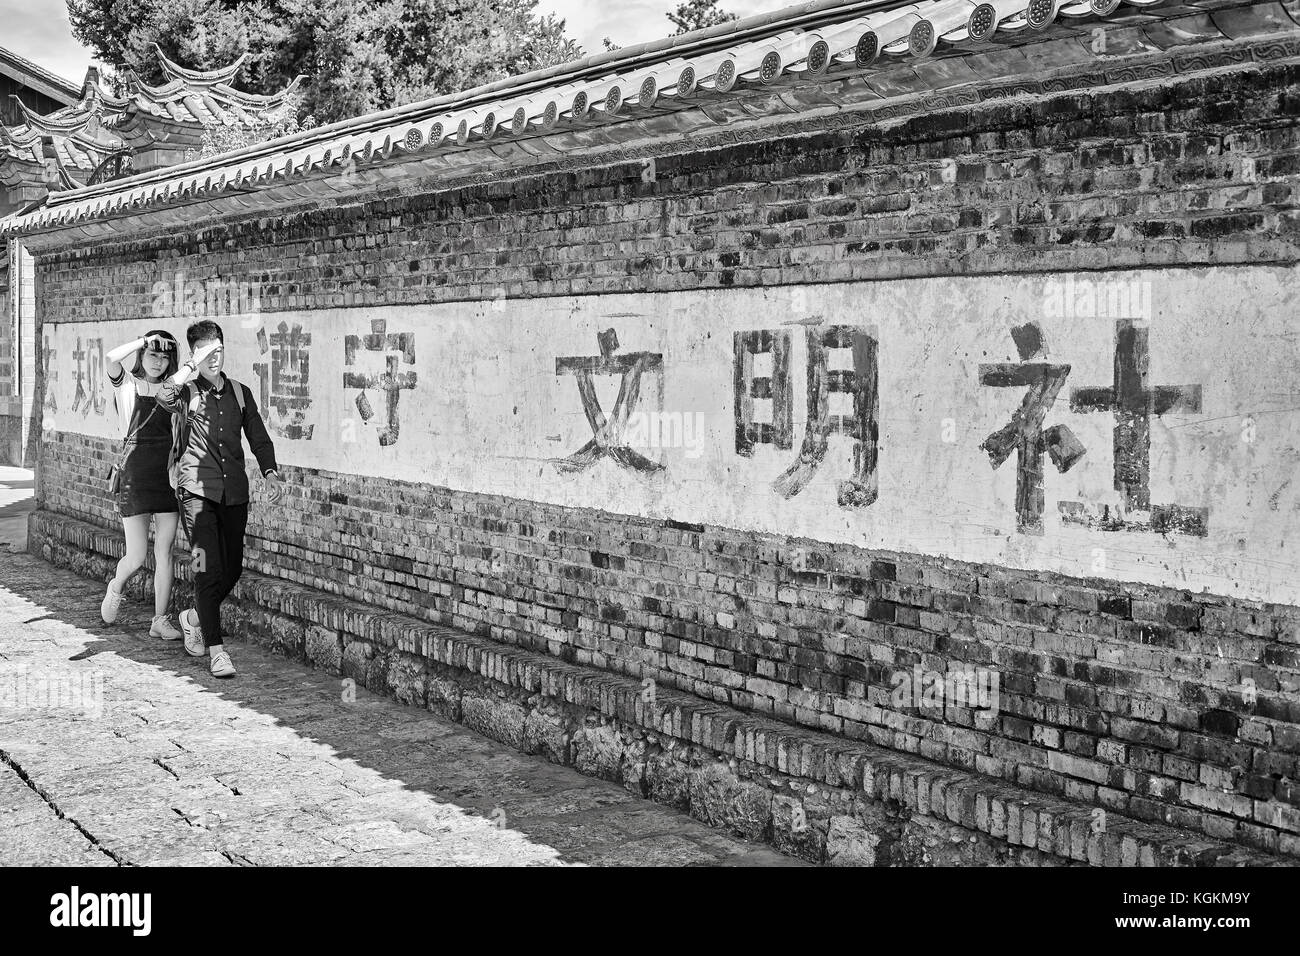 Lijiang, Yunnan, China - 28. September 2017: Junge chinesische Spaziergang im Schatten der Dayan wall. Altstadt von Lijiang ist ein UNESCO-Weltkulturerbe. Stockfoto